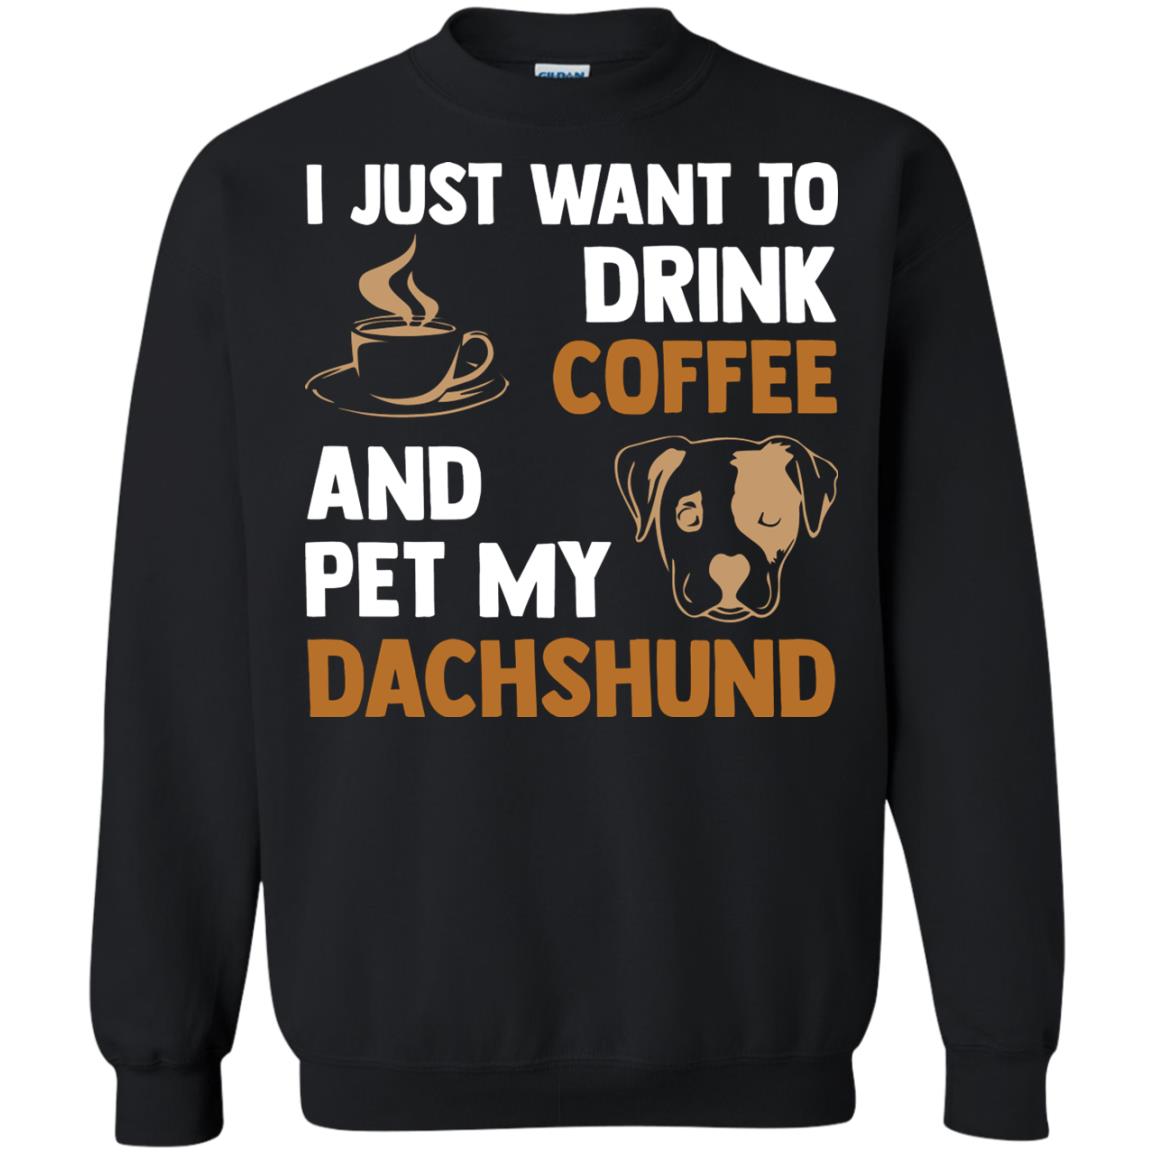 I Just Want To Drink Coffee And Pet My Dachshund ShirtG180 Gildan Crewneck Pullover Sweatshirt 8 oz.